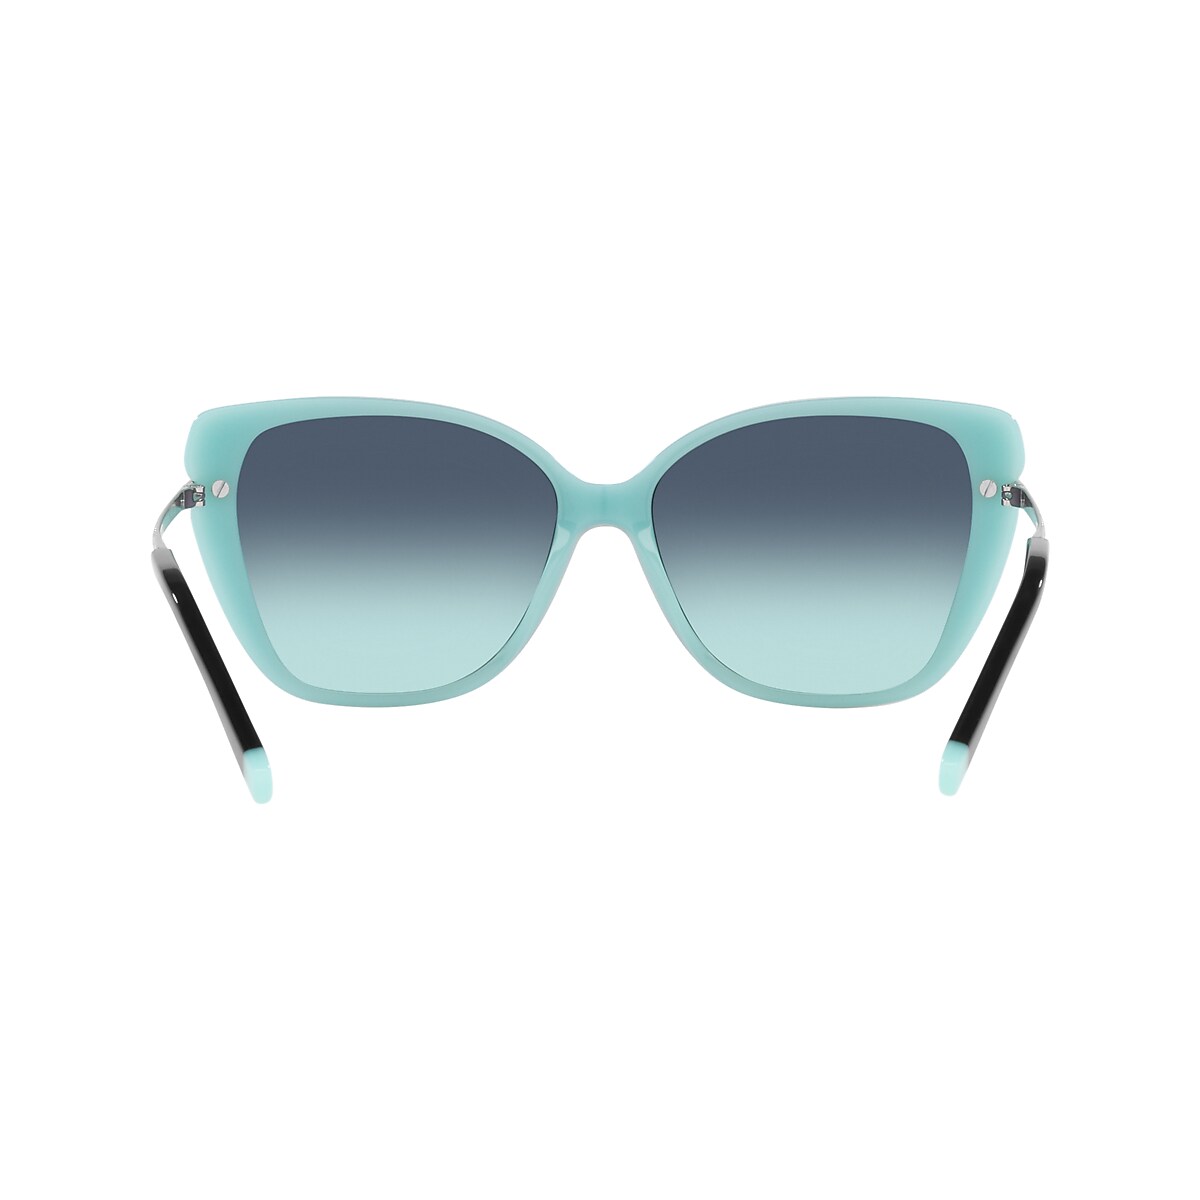 Tiffany Black On Tiffany Blue Sunglasses | Glasses.com® | Free 